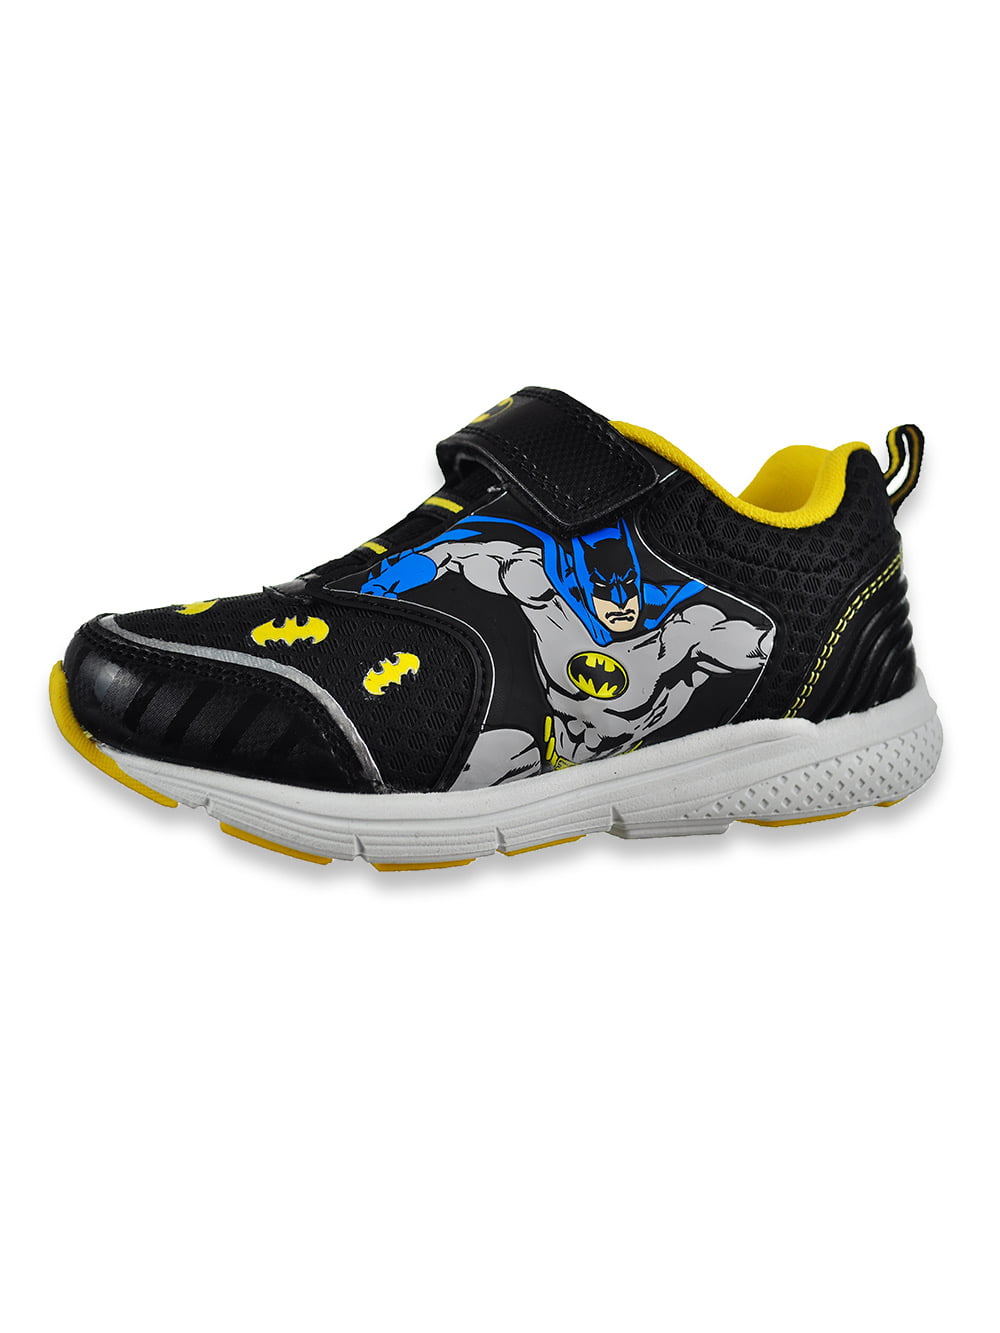 DC Comics Toddler Boys Batman Shoe Sneakers Light-Up Size 6 80136 NEW 